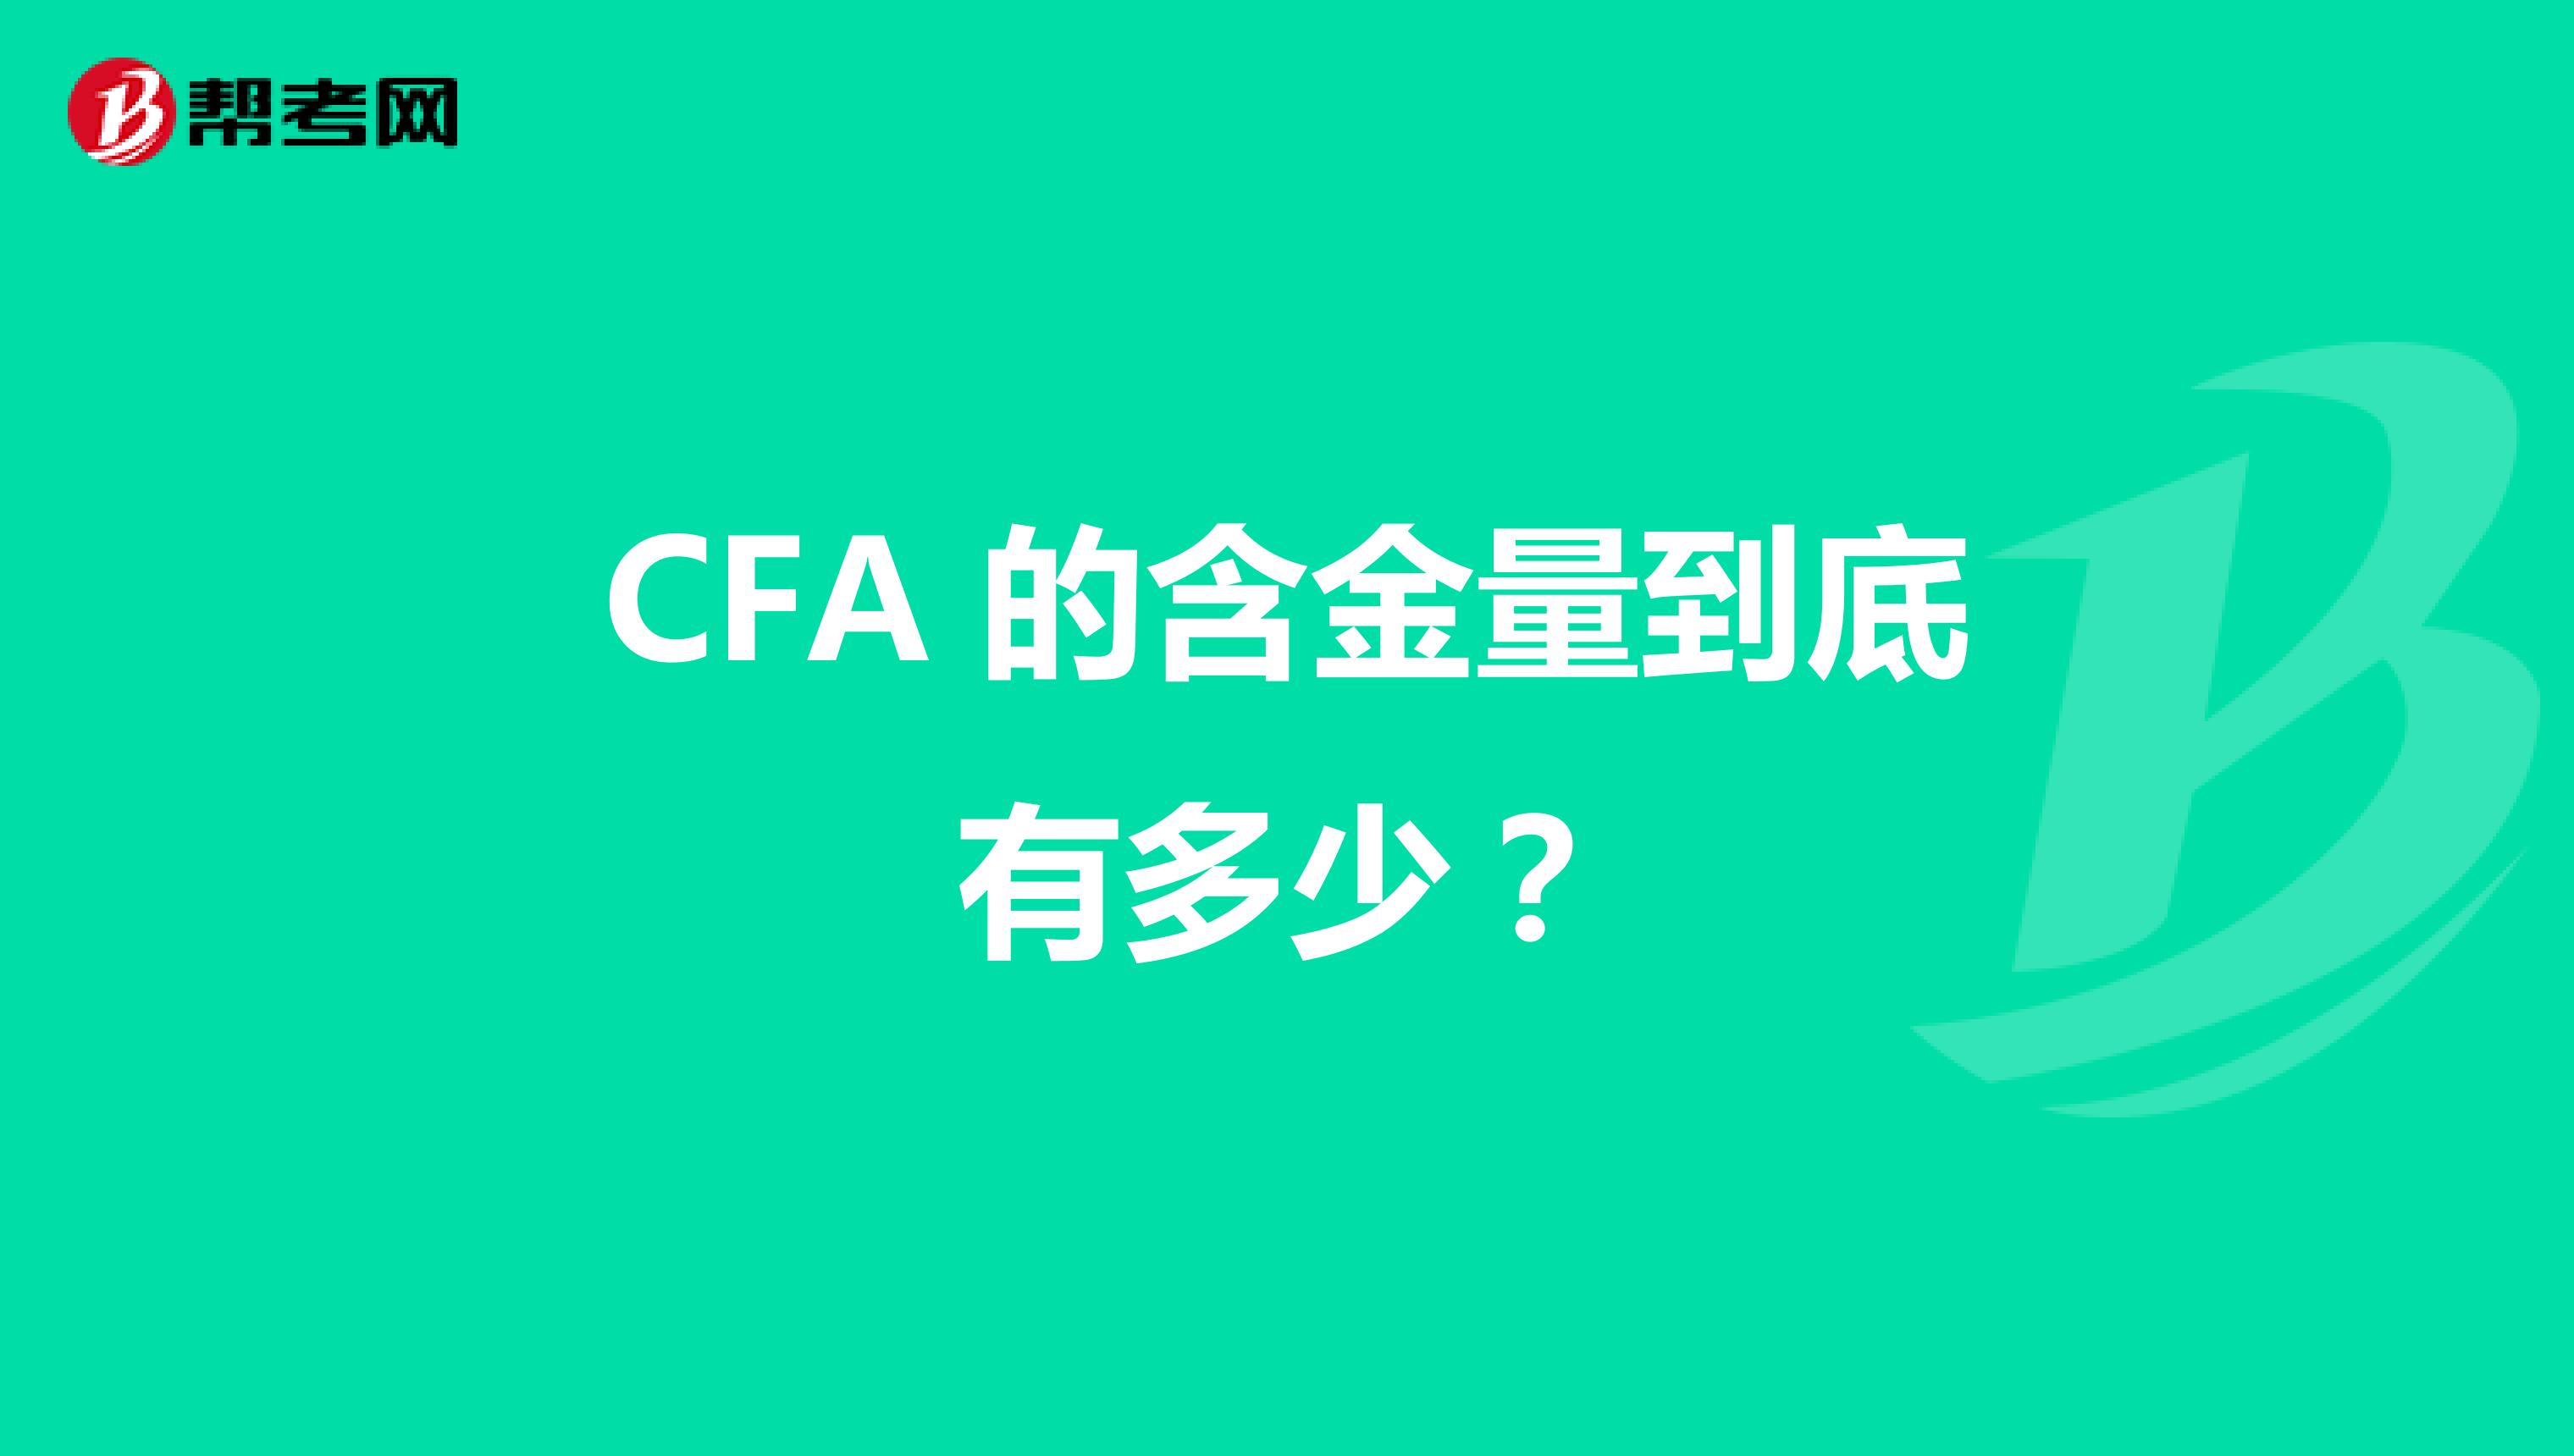 CFA 的含金量到底有多少？